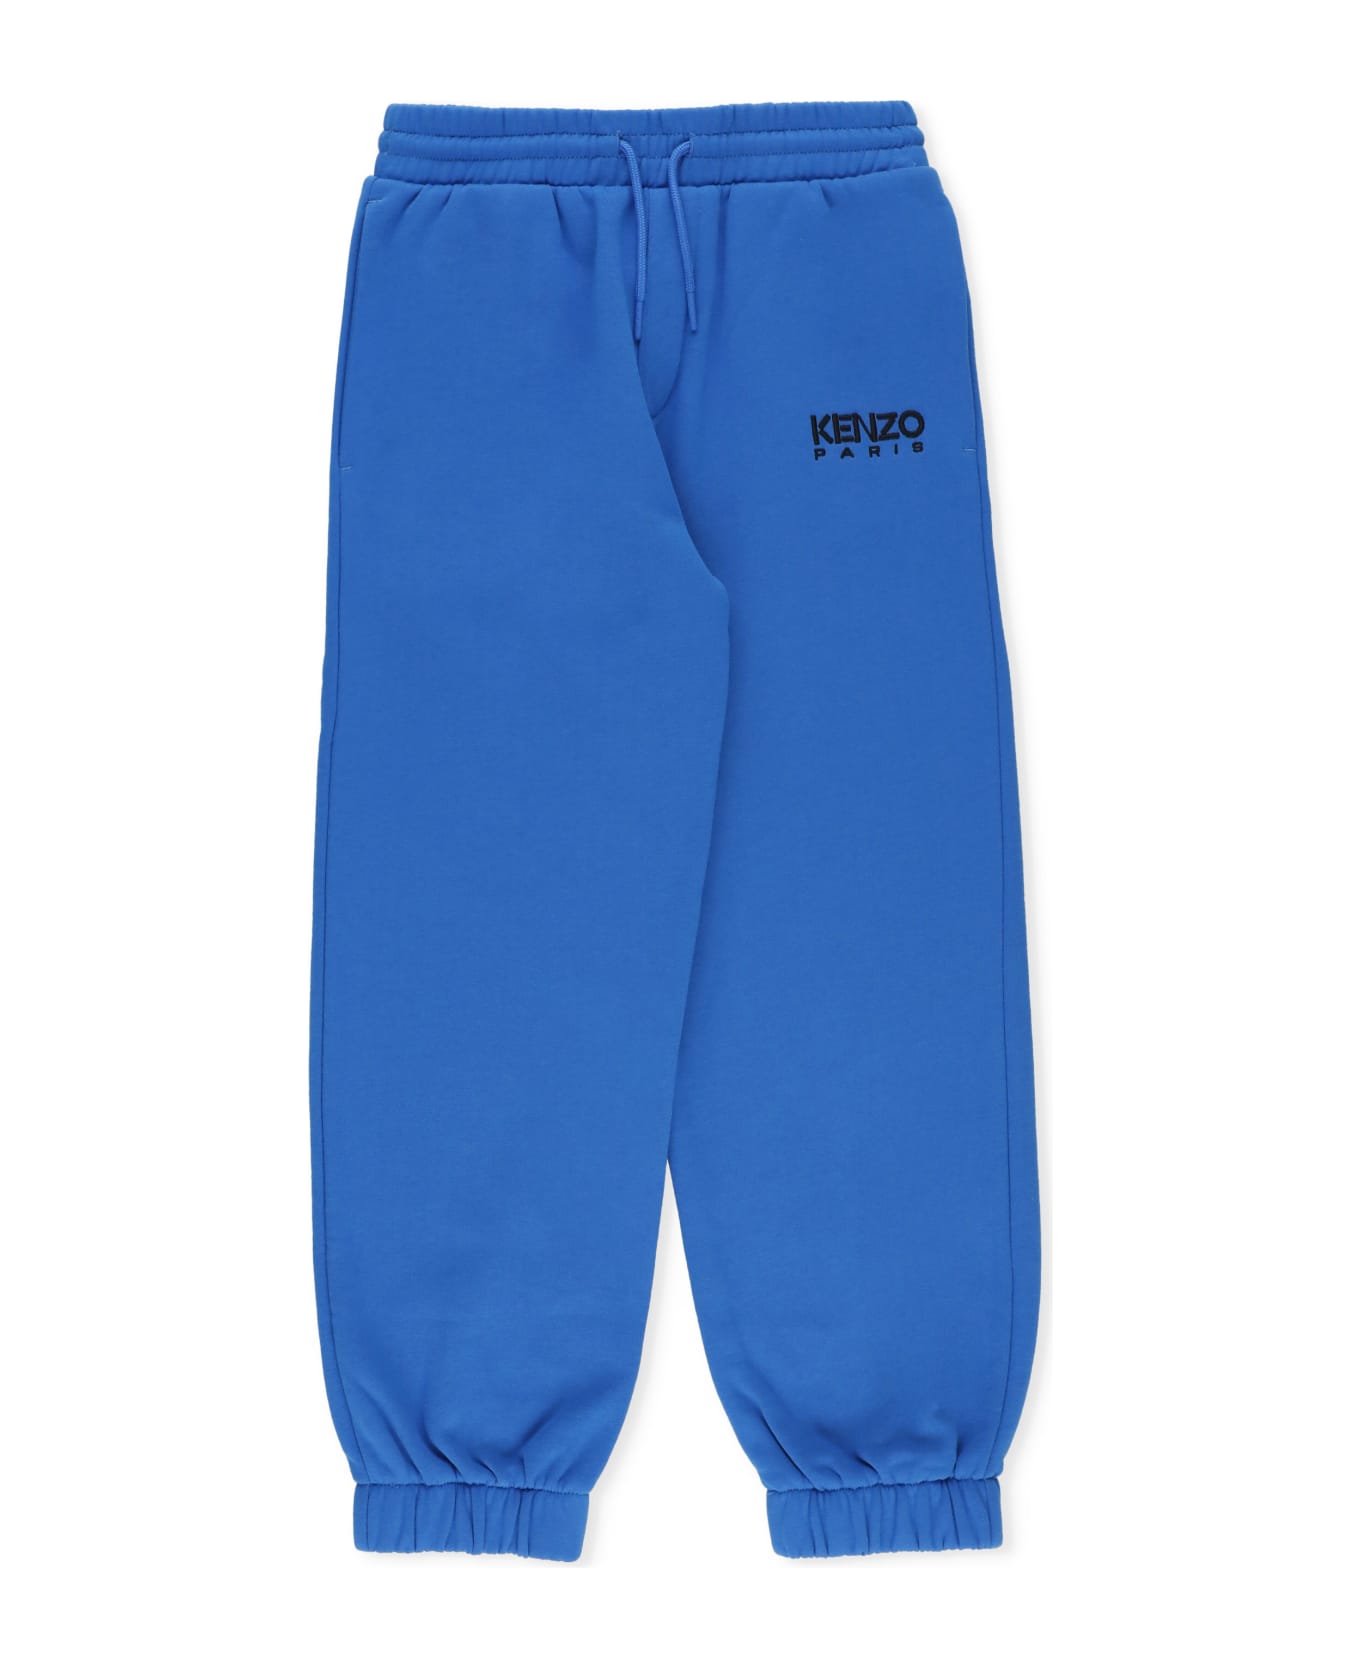 Kenzo Kids Cotton Logoed Pants - Blue